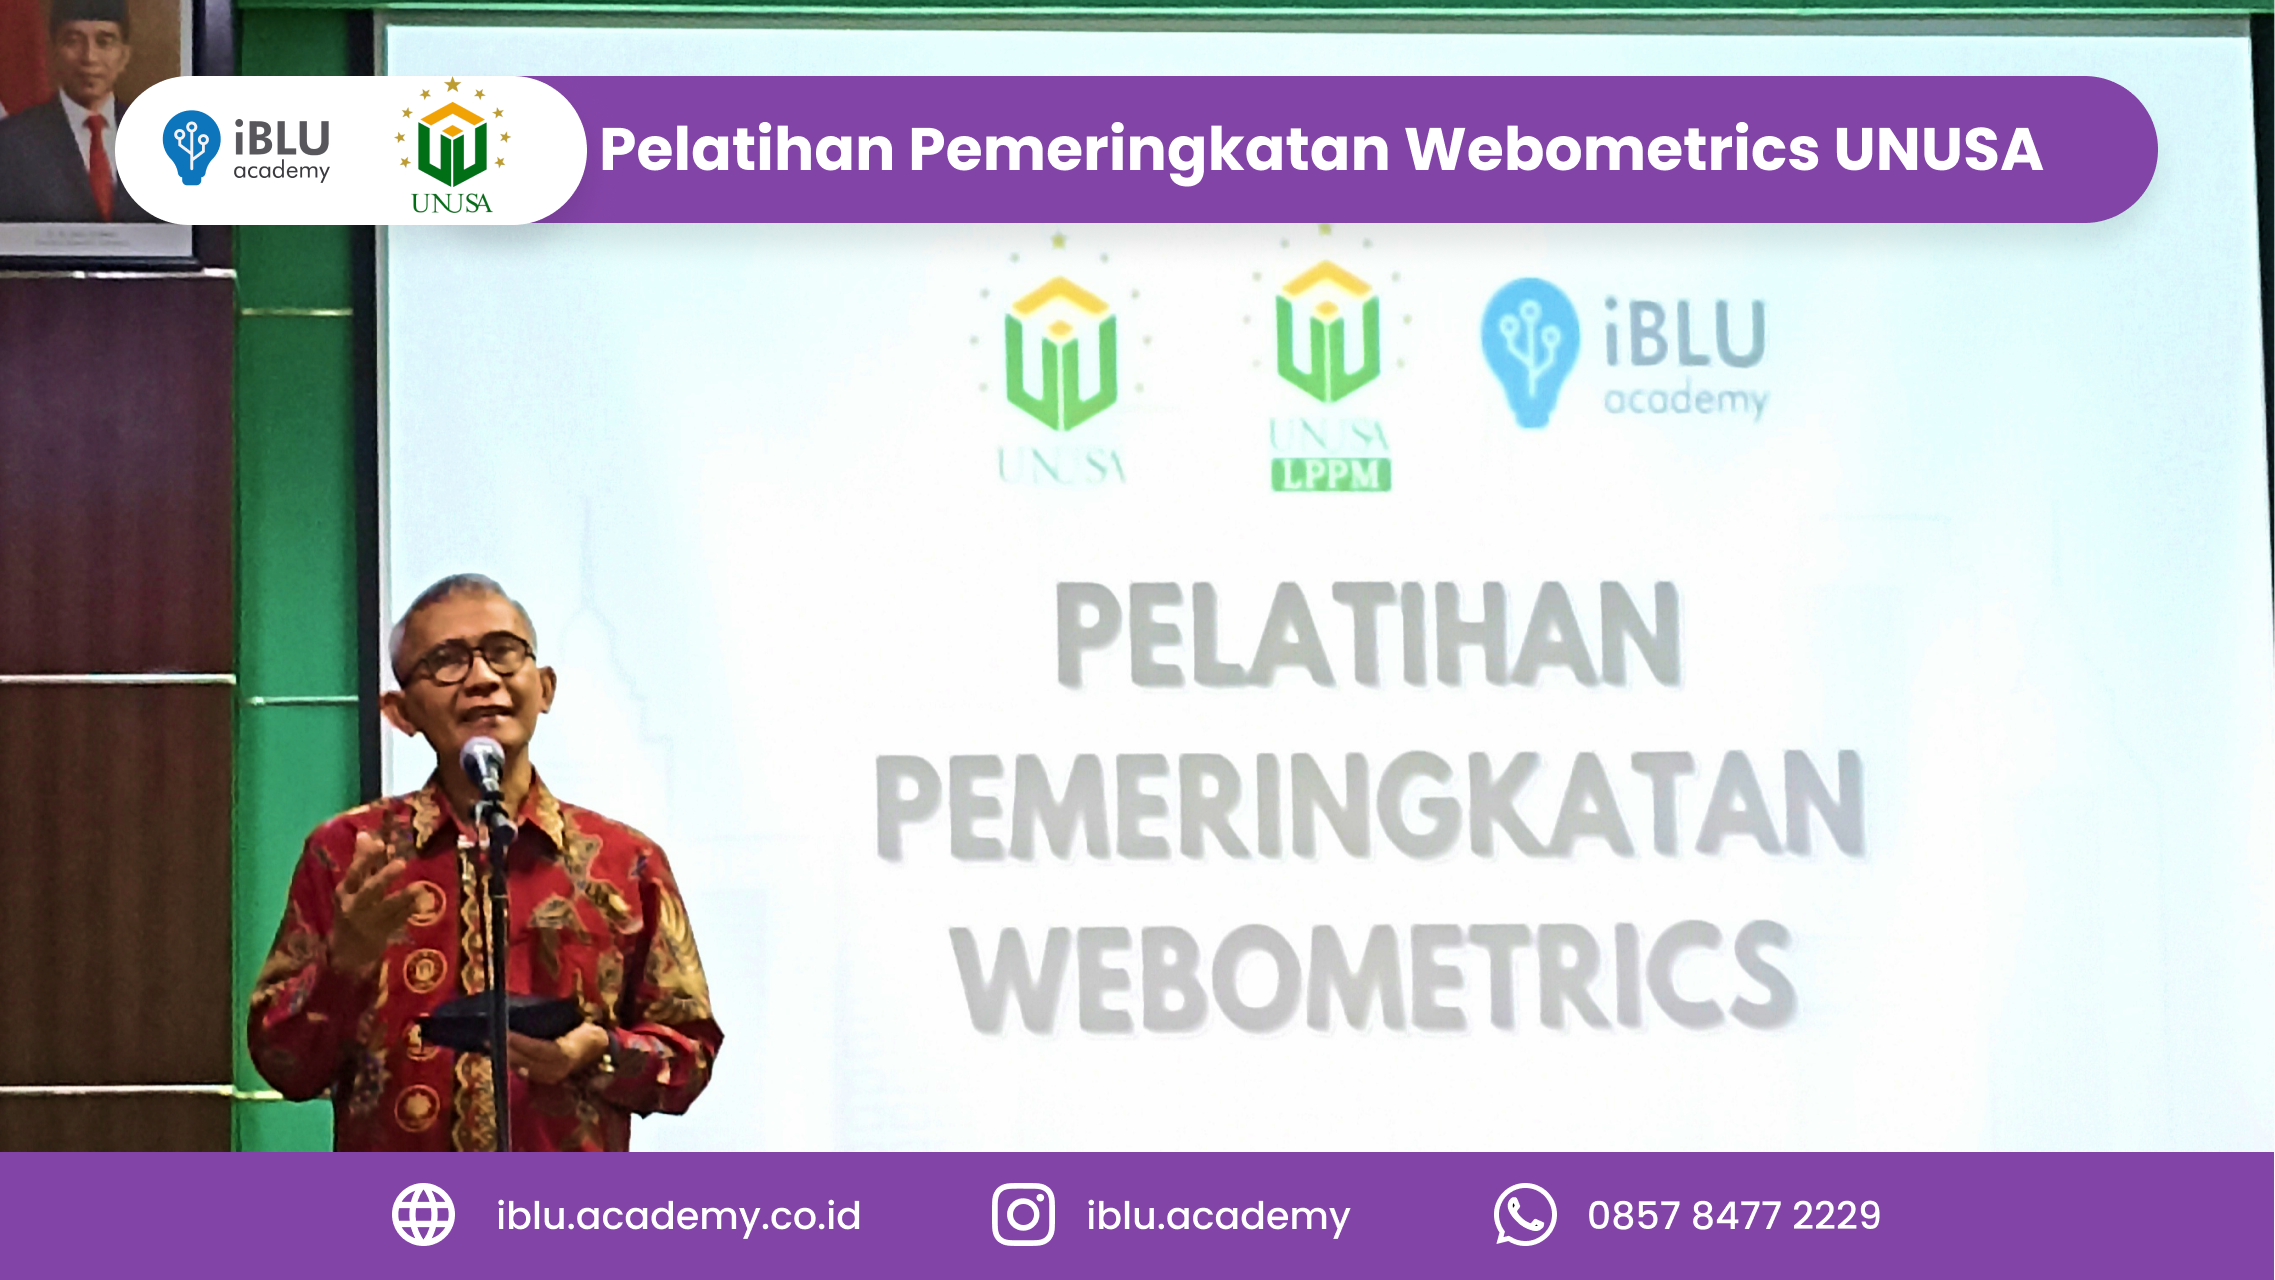 You are currently viewing Pelatihan Pemeringkatan Webometrics Bersama UNUSA